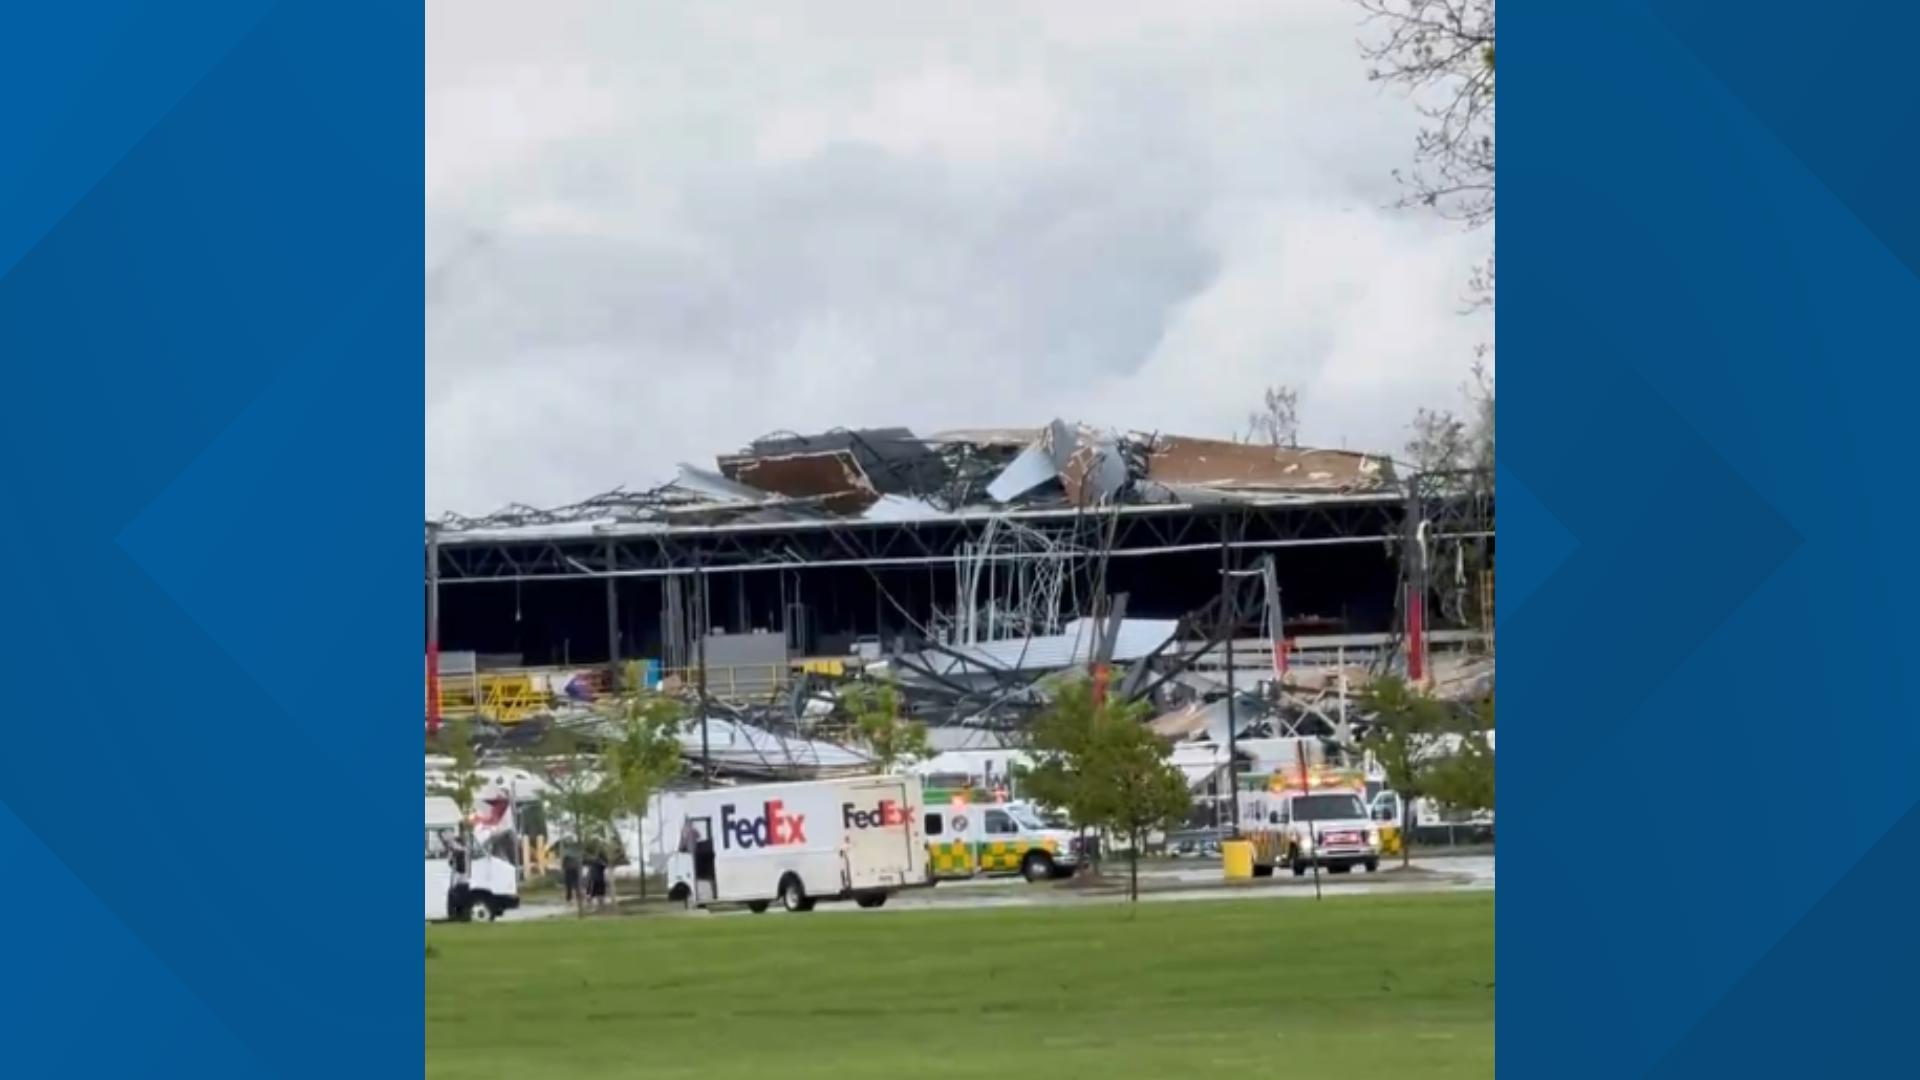 Video of damaged FedEx building in Kalamazoo